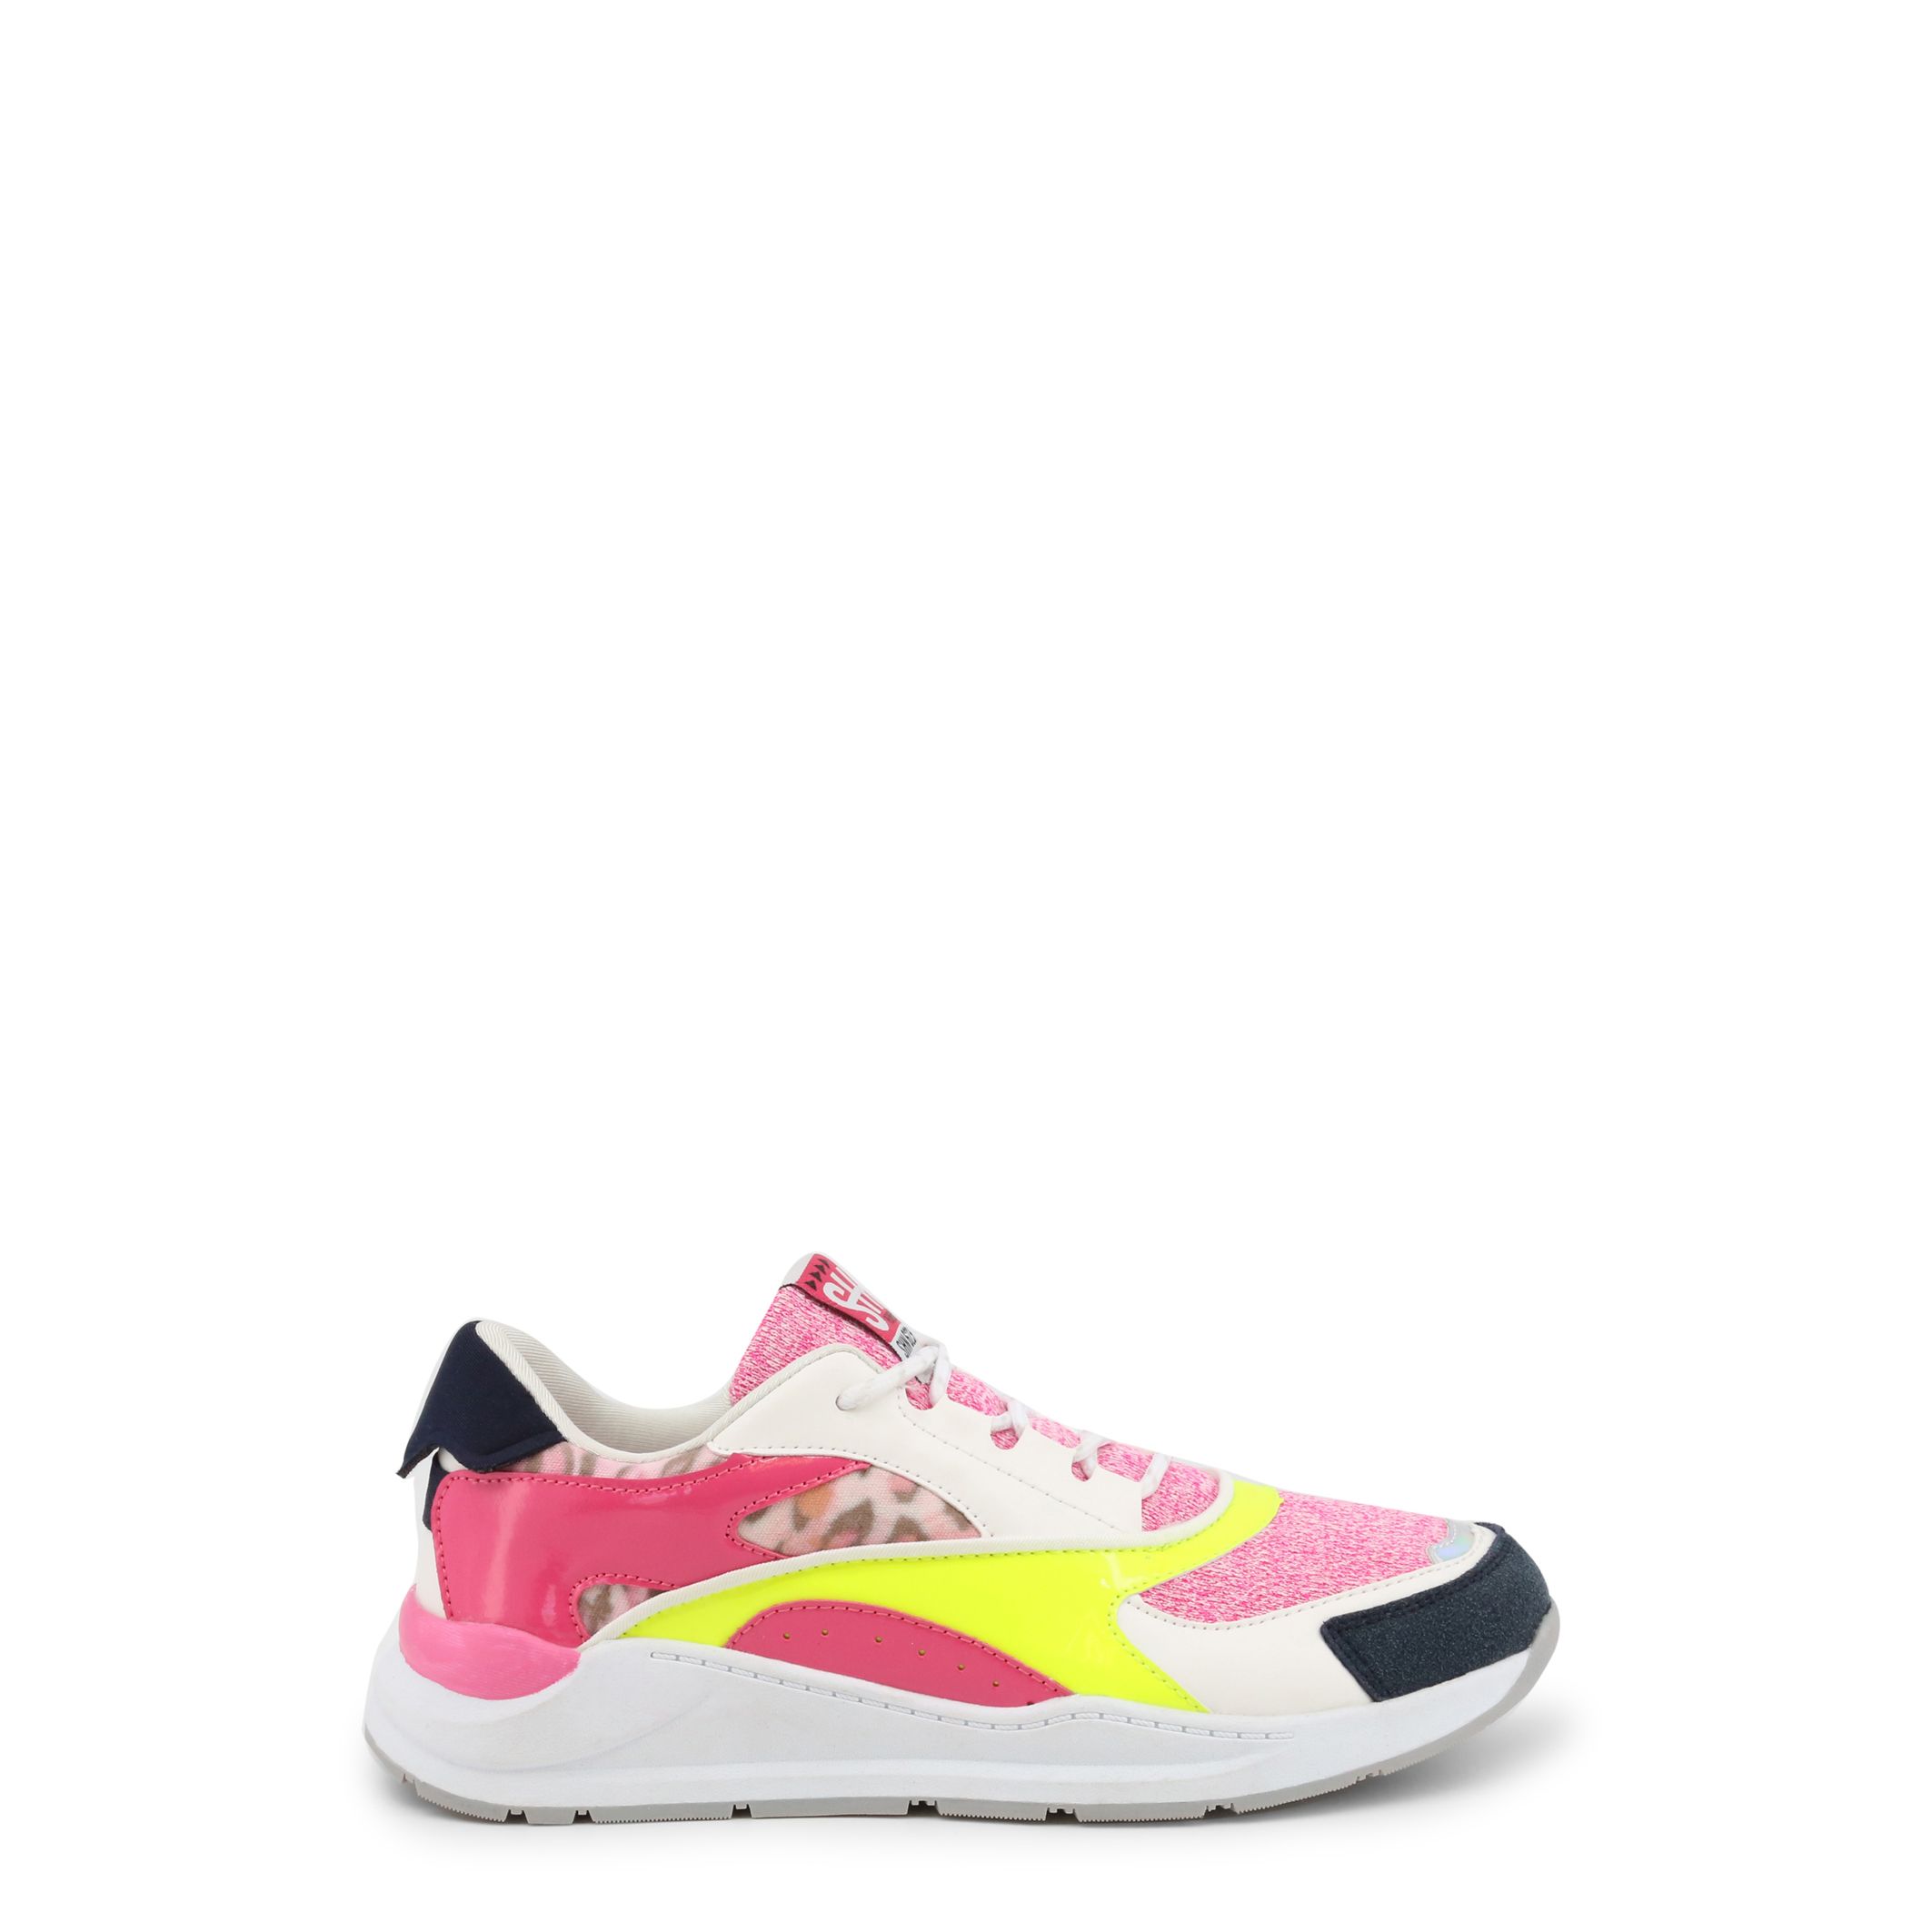 Schuhe & Sneakers & Kinder & Shone & 3526-014_Fuxia & Rosa